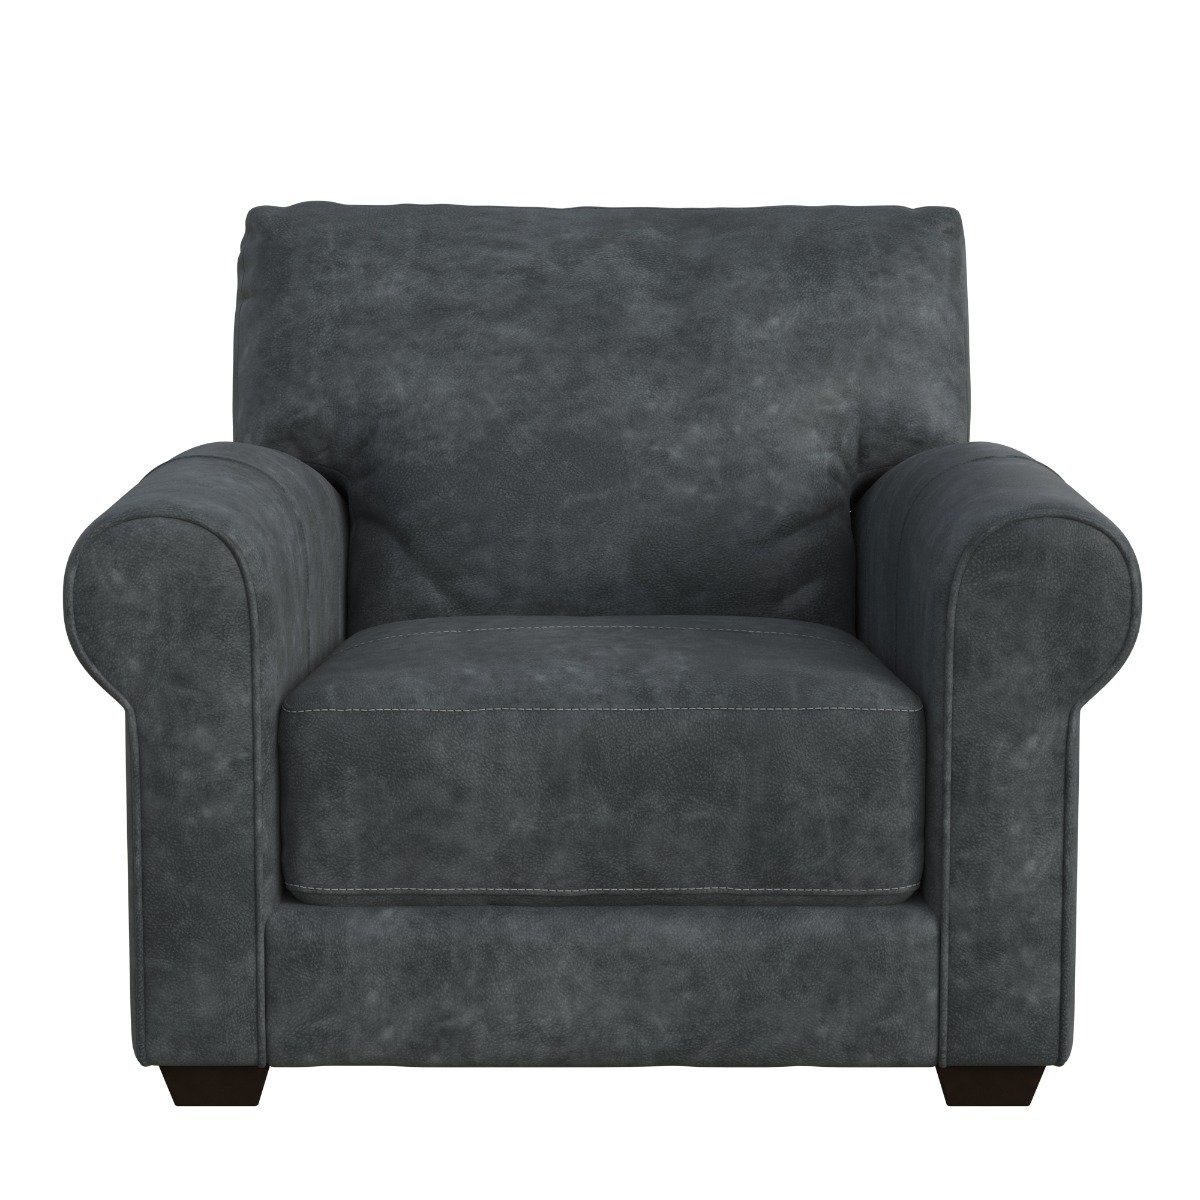 Houston Armchair, Grey Leather | Barker & Stonehouse